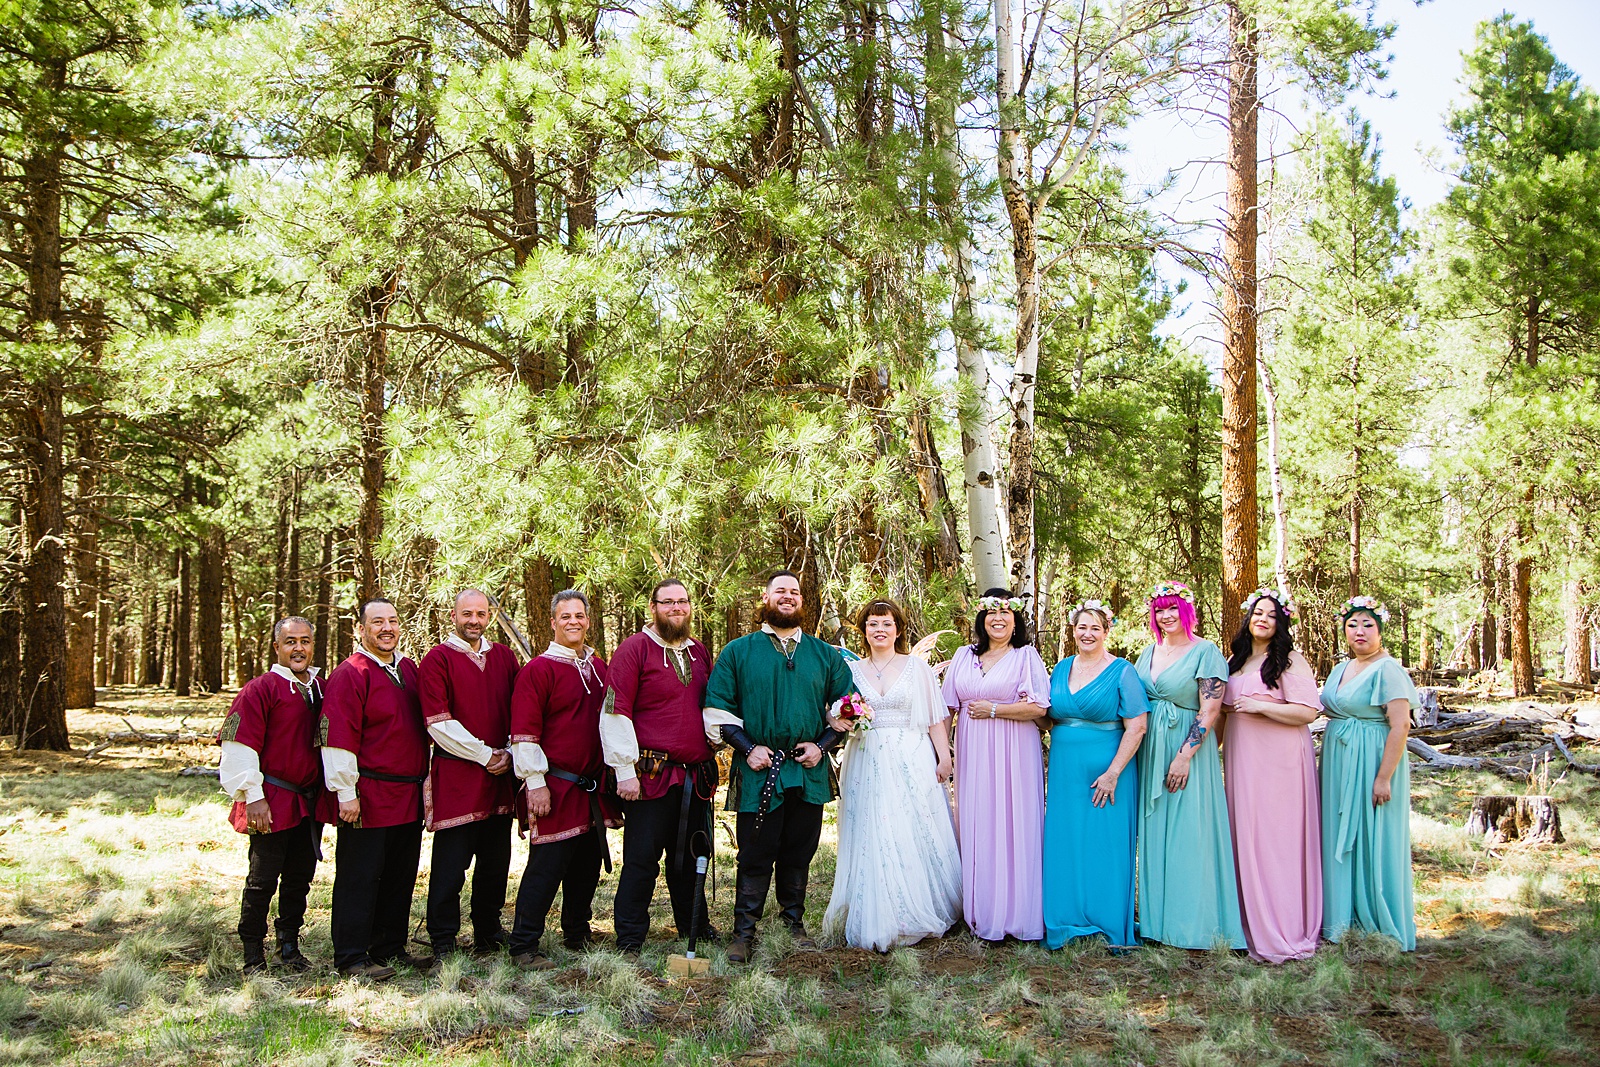 Renaissance inspired wedding party together at a Arizona Nordic Village wedding by Arizona wedding photographer PMA Photography.